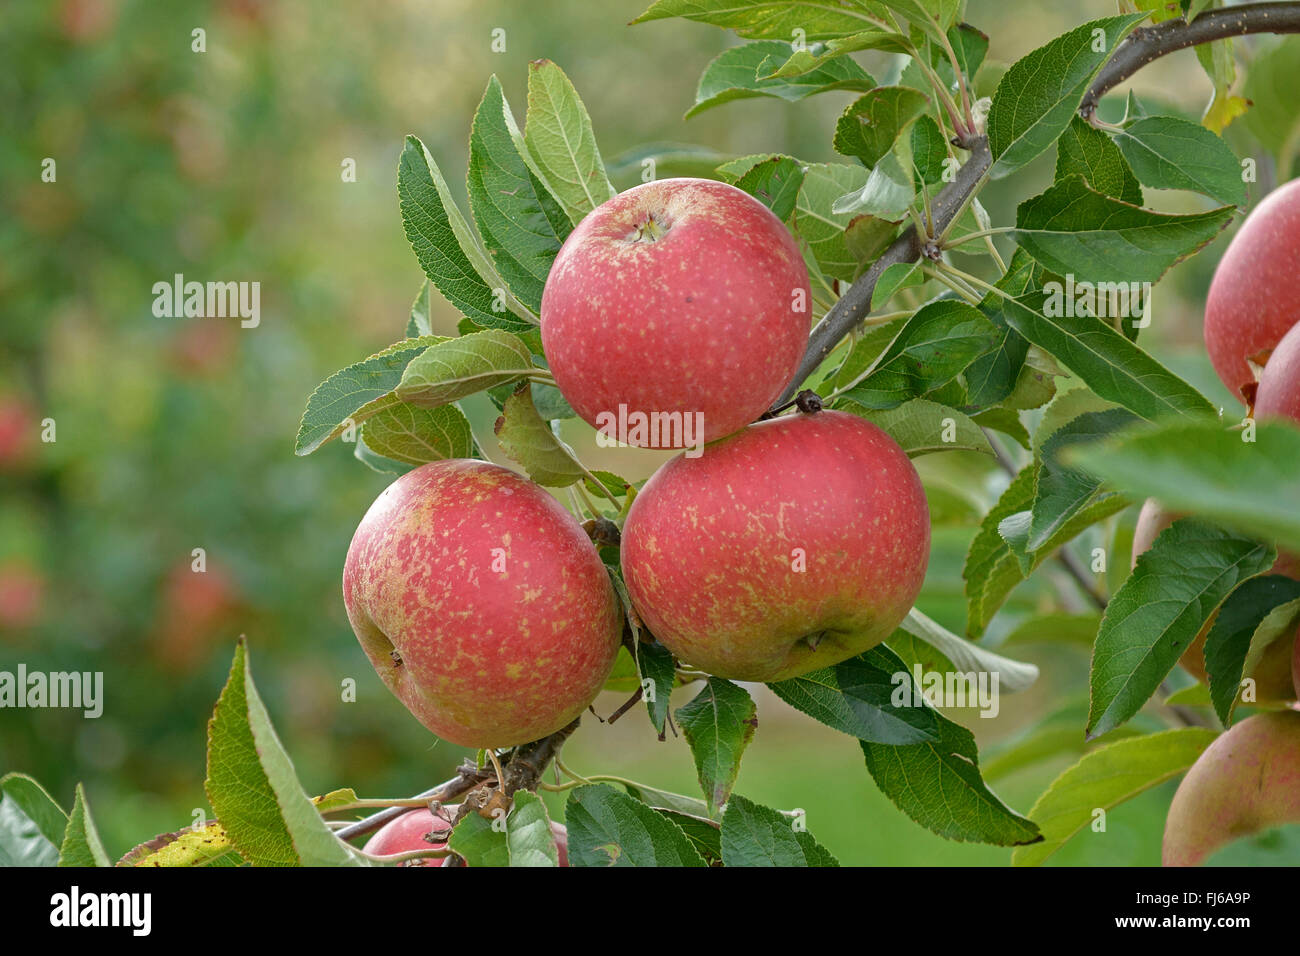 apple tree (Malus domestica 'Margol', Malus domestica Margol), aplles on a tree, cultivar Margol, Germany Stock Photo